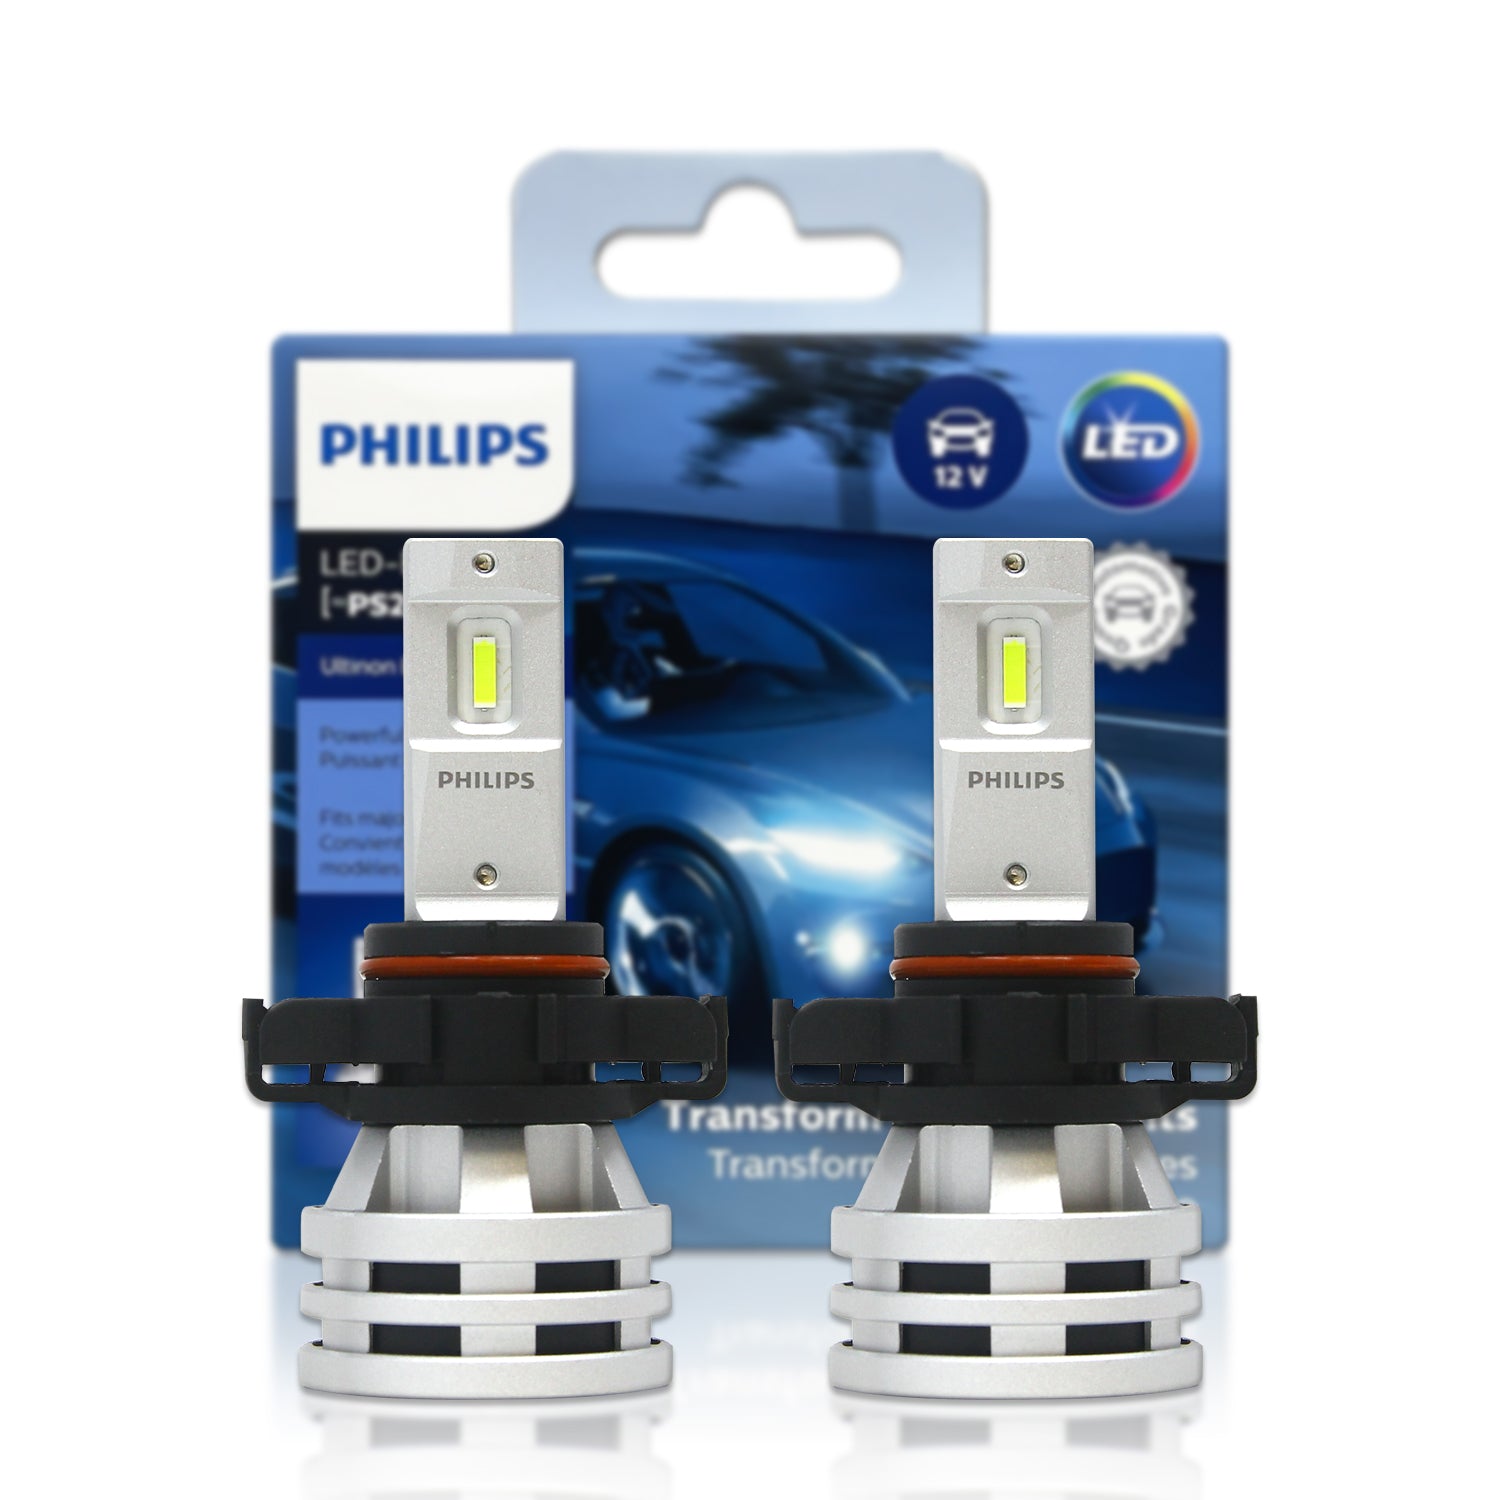 Philips H7 Ultinon LED. PHILIPS